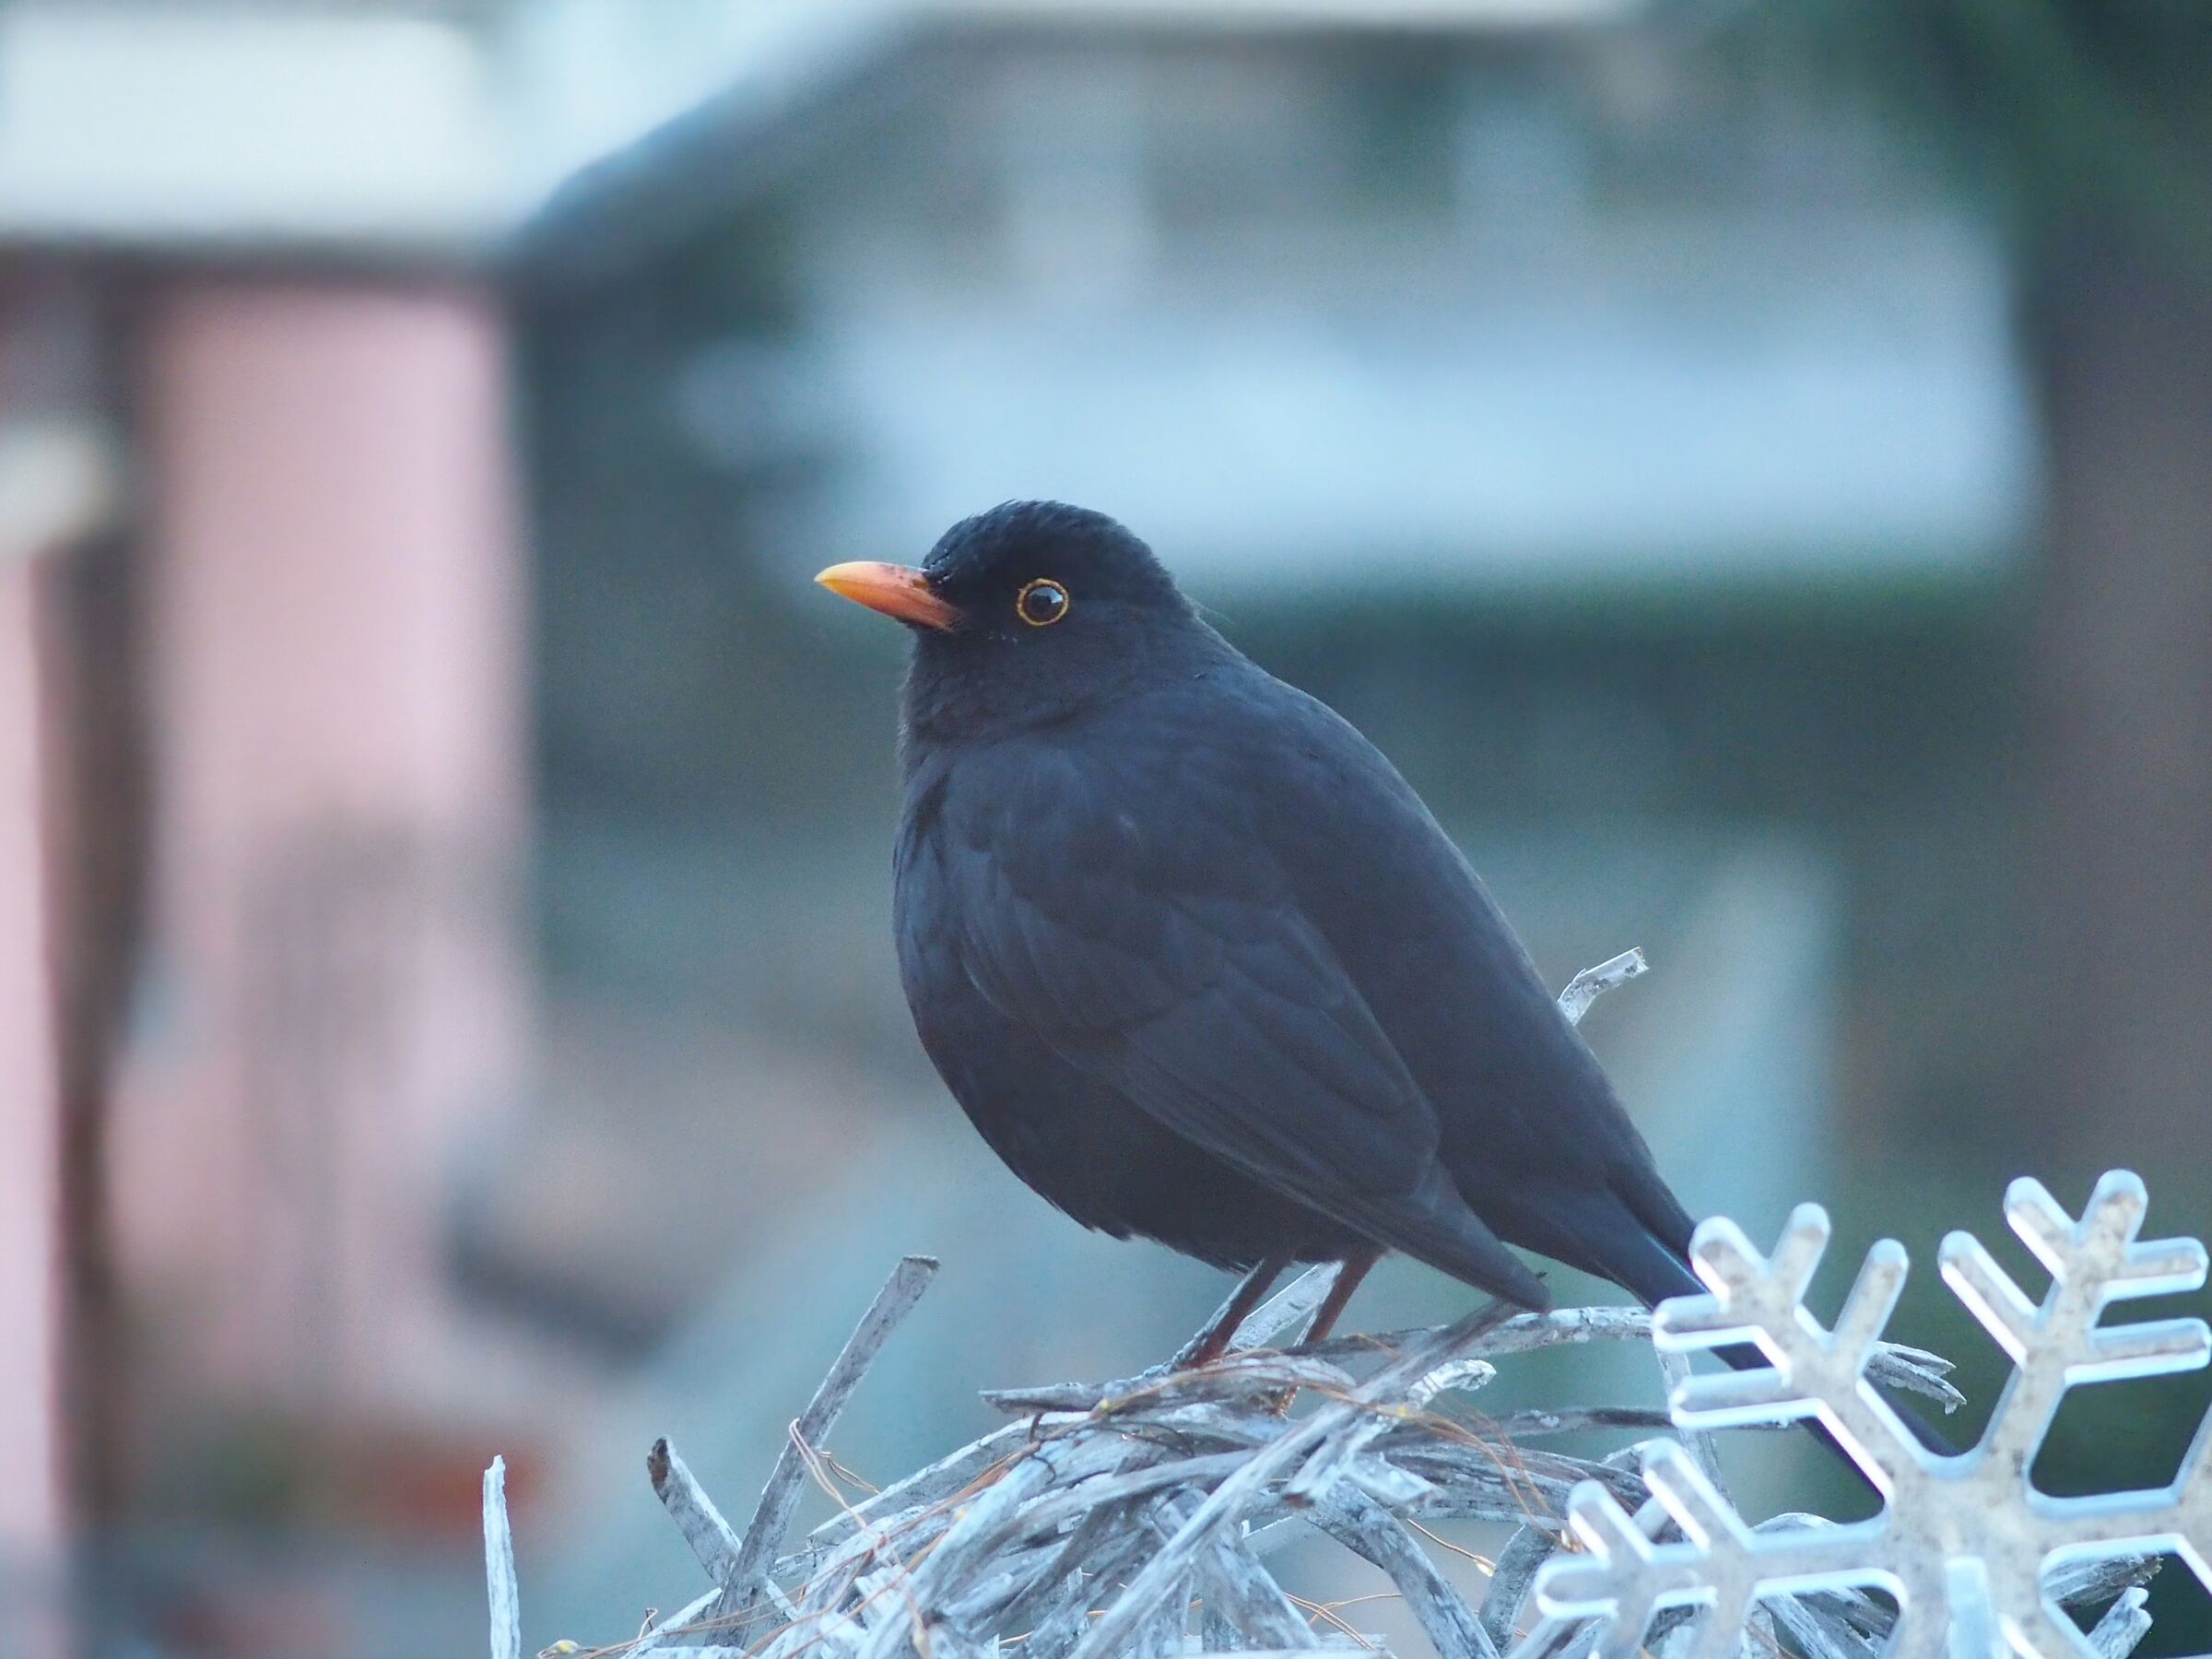 The male blackbird ...